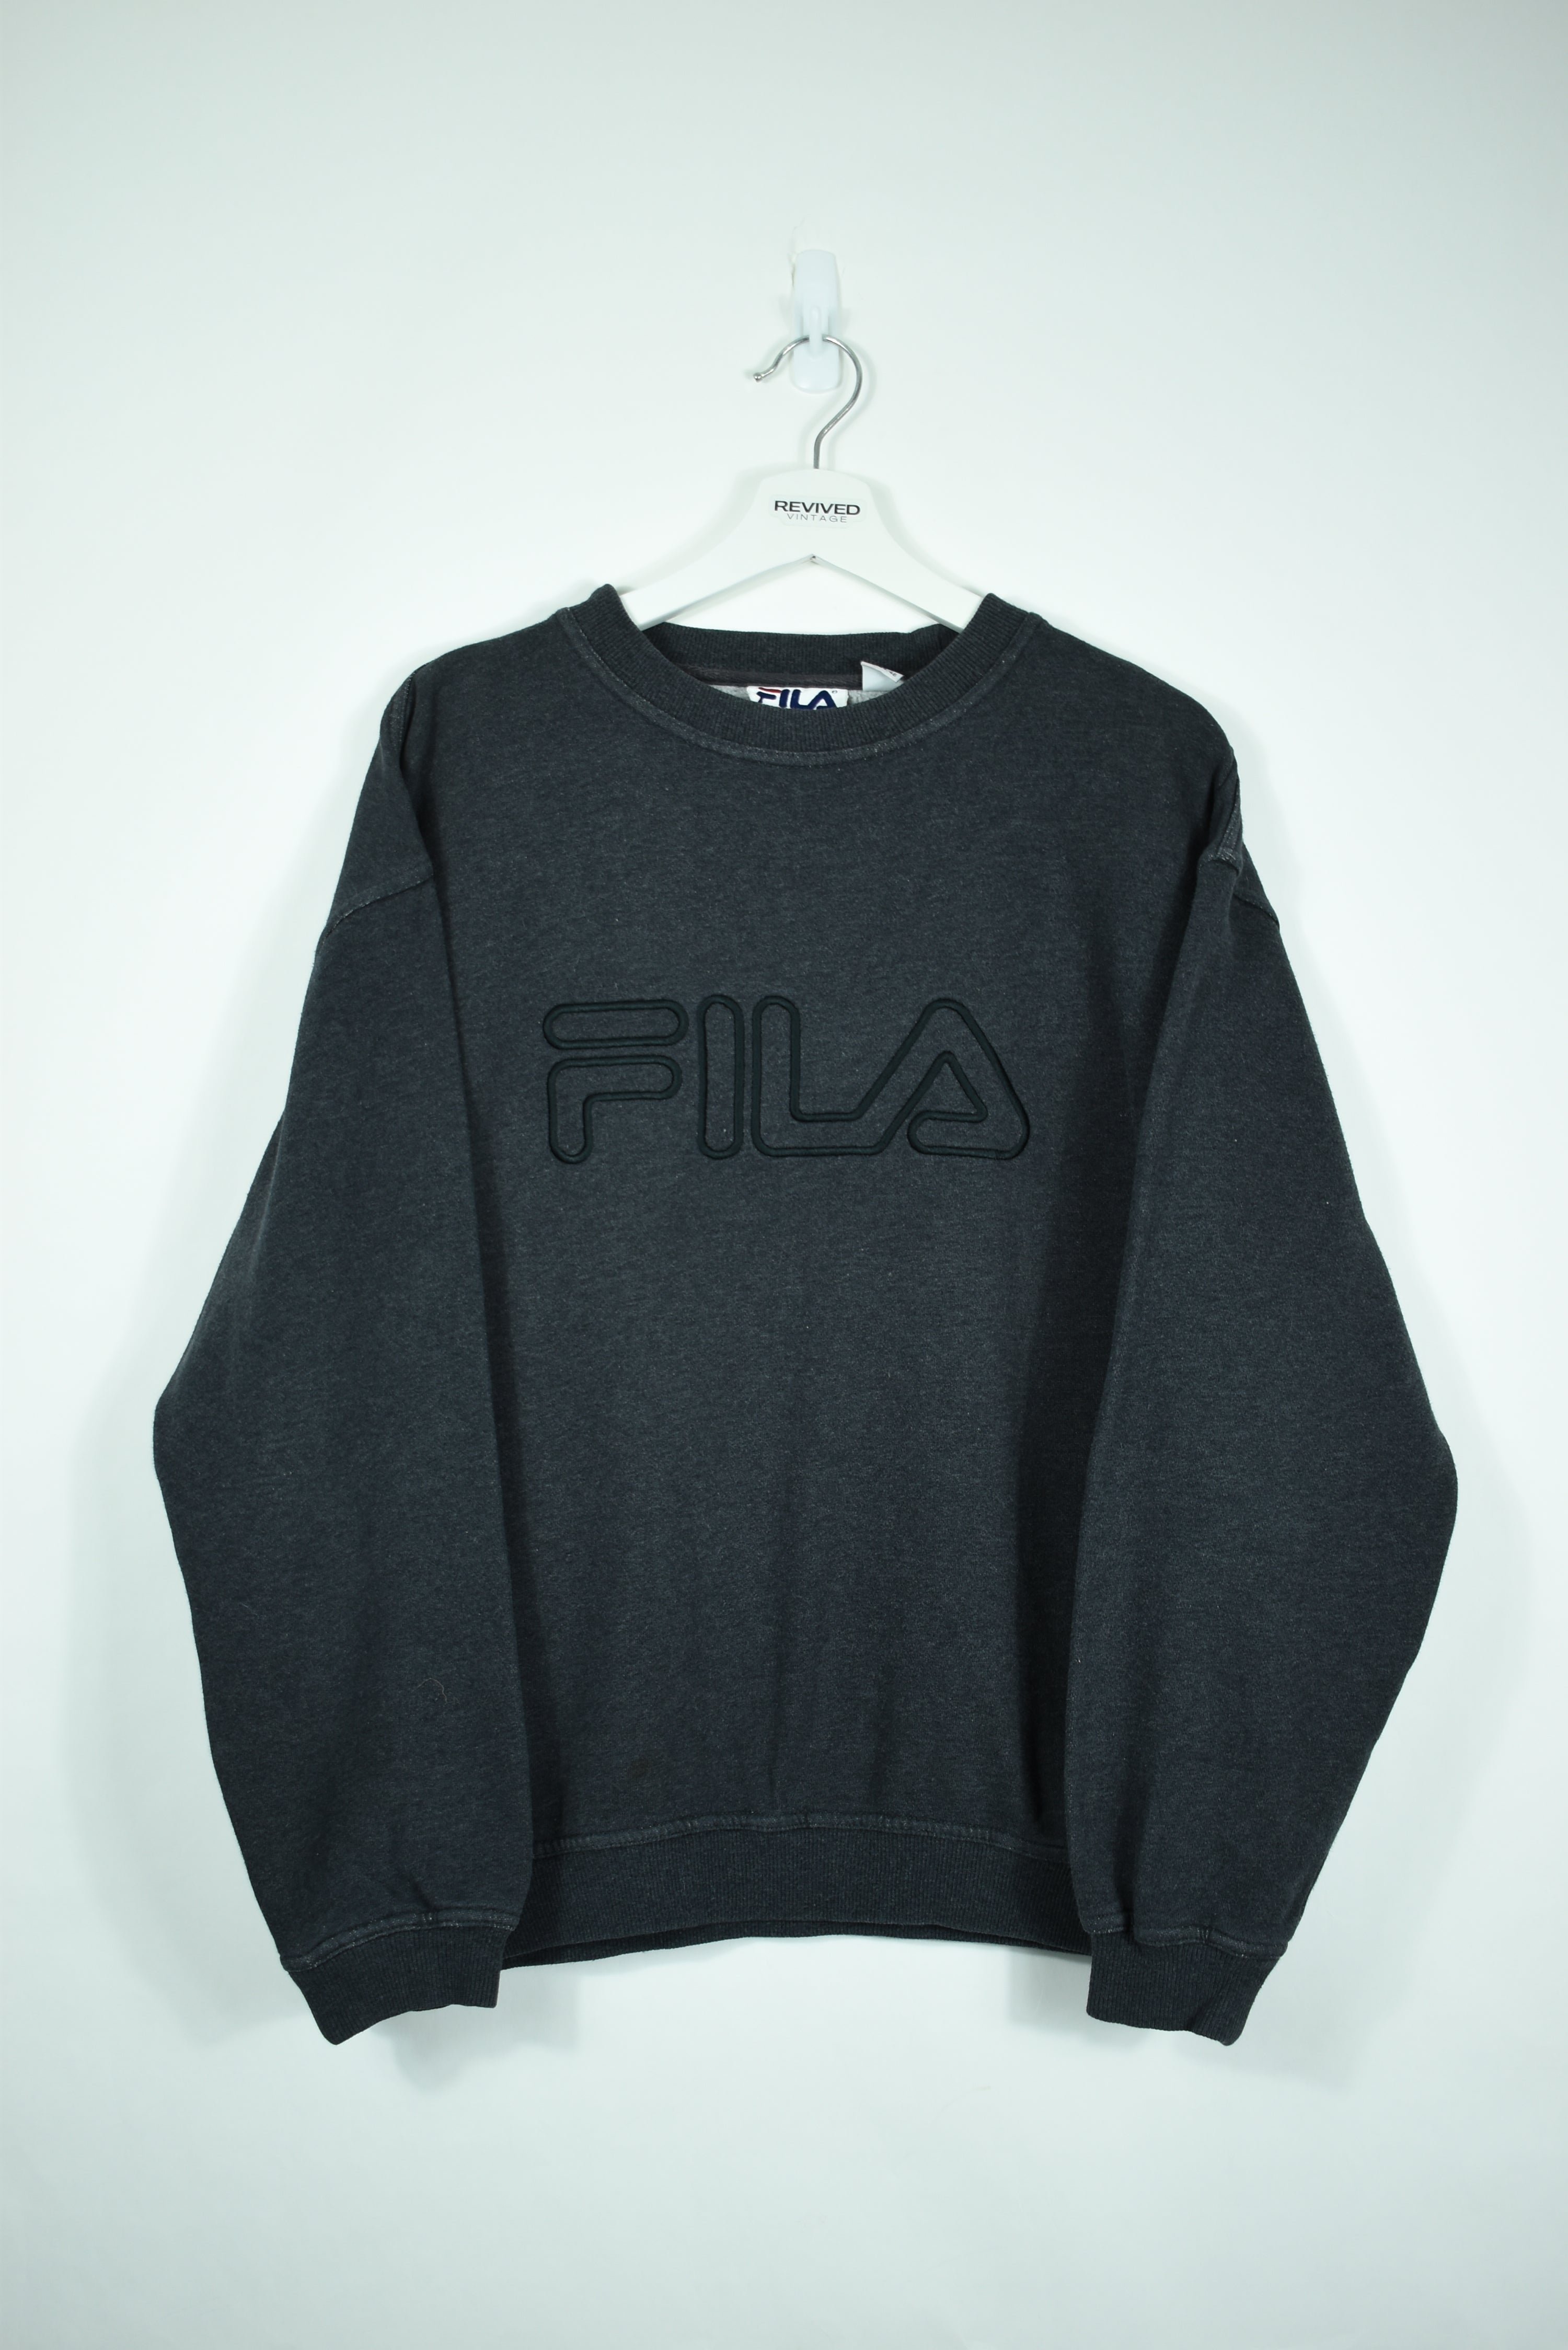 Vintage Fila Embroidery Sweatshirt Dark Grey Large